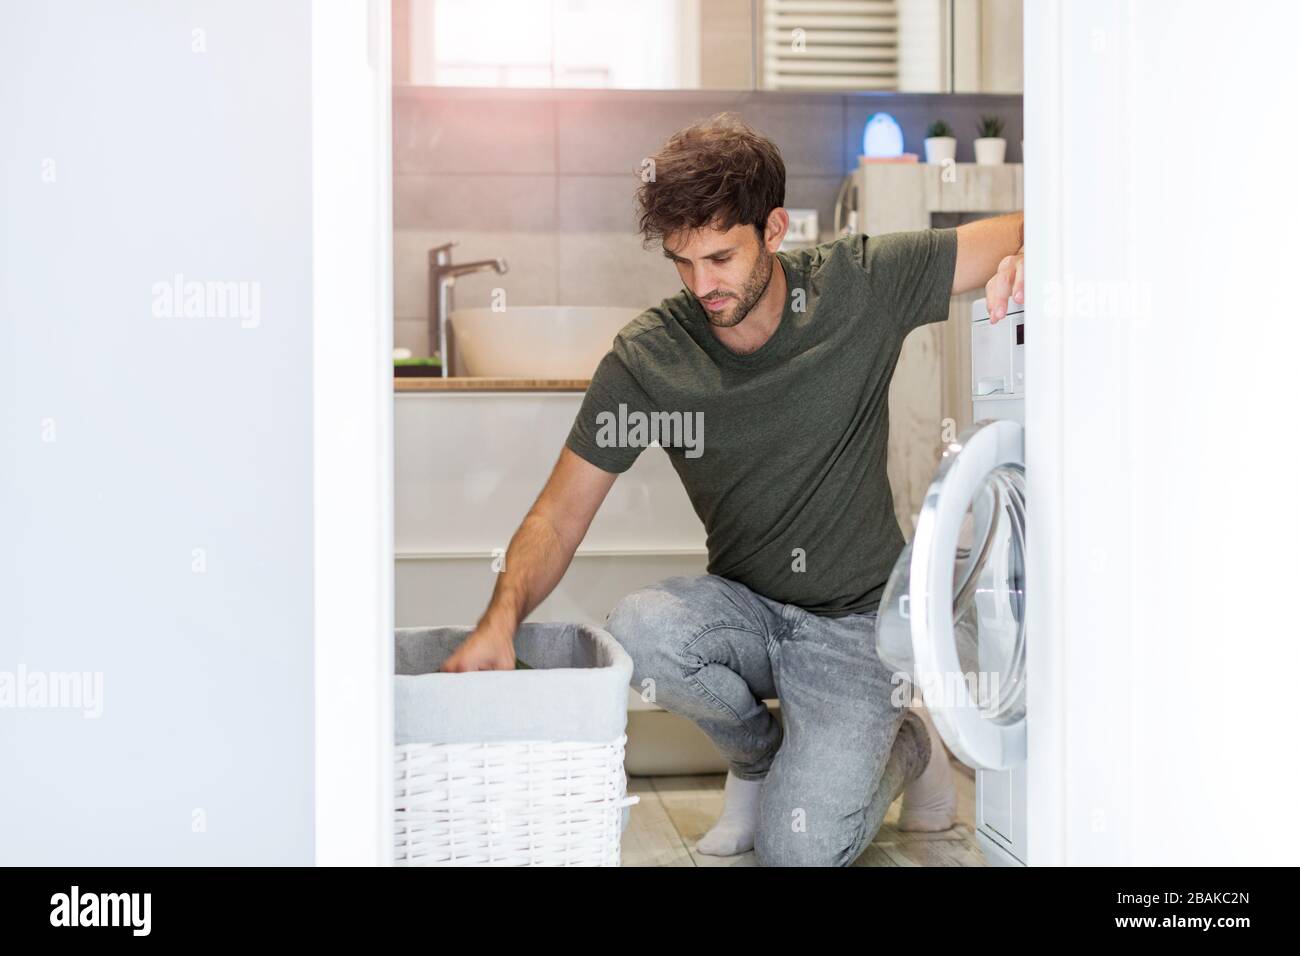 Man Putting his Laundry into a Washing Machine Stock Photo